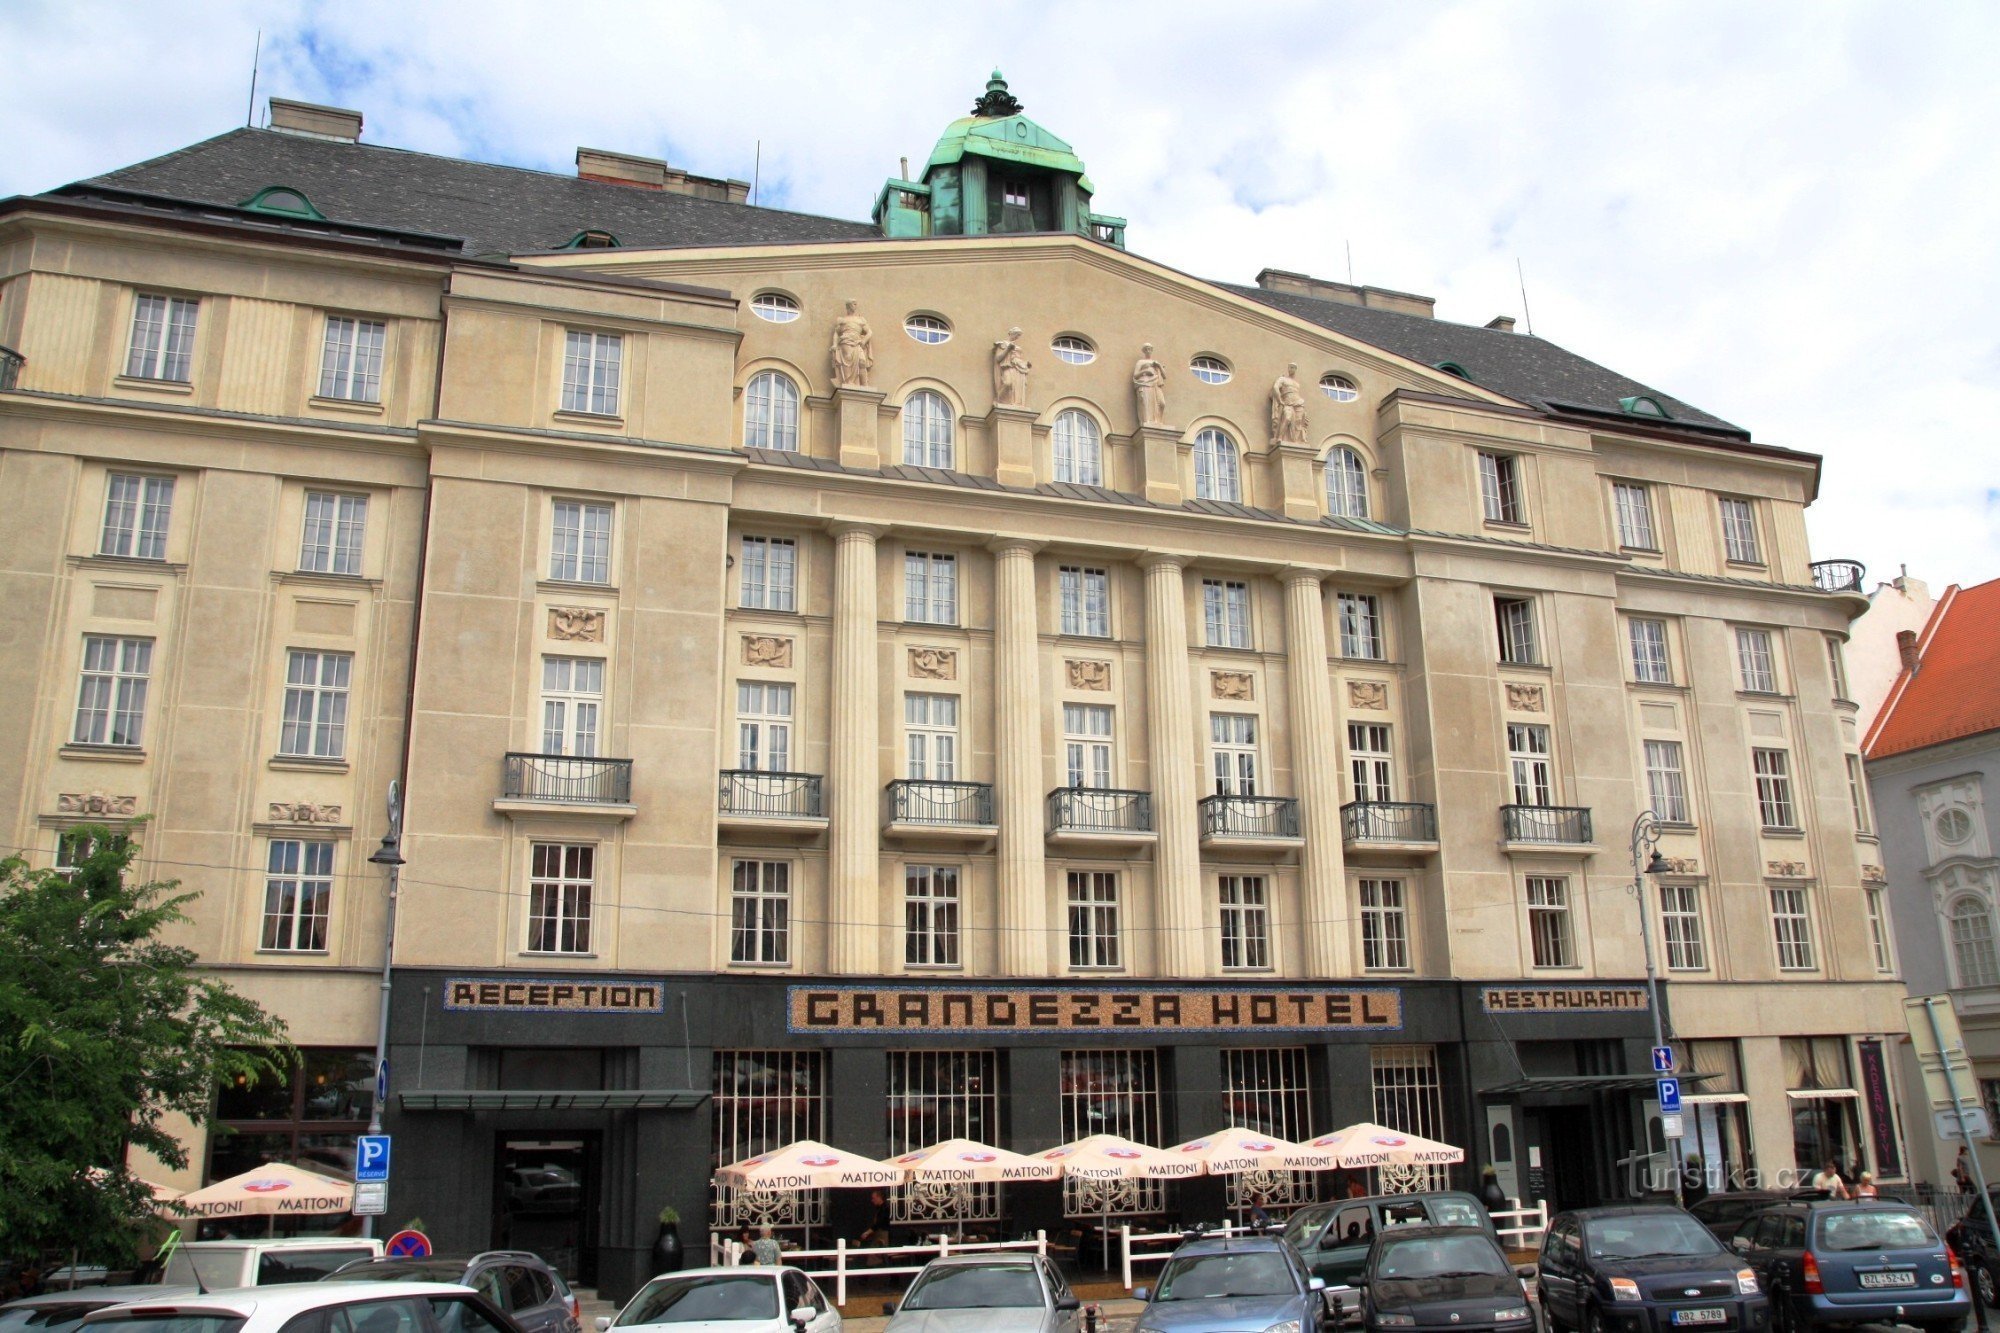 Brno - bivša Cyrilometodejská zálažna, danas hotel Grandezza. Pročelje zgrade po